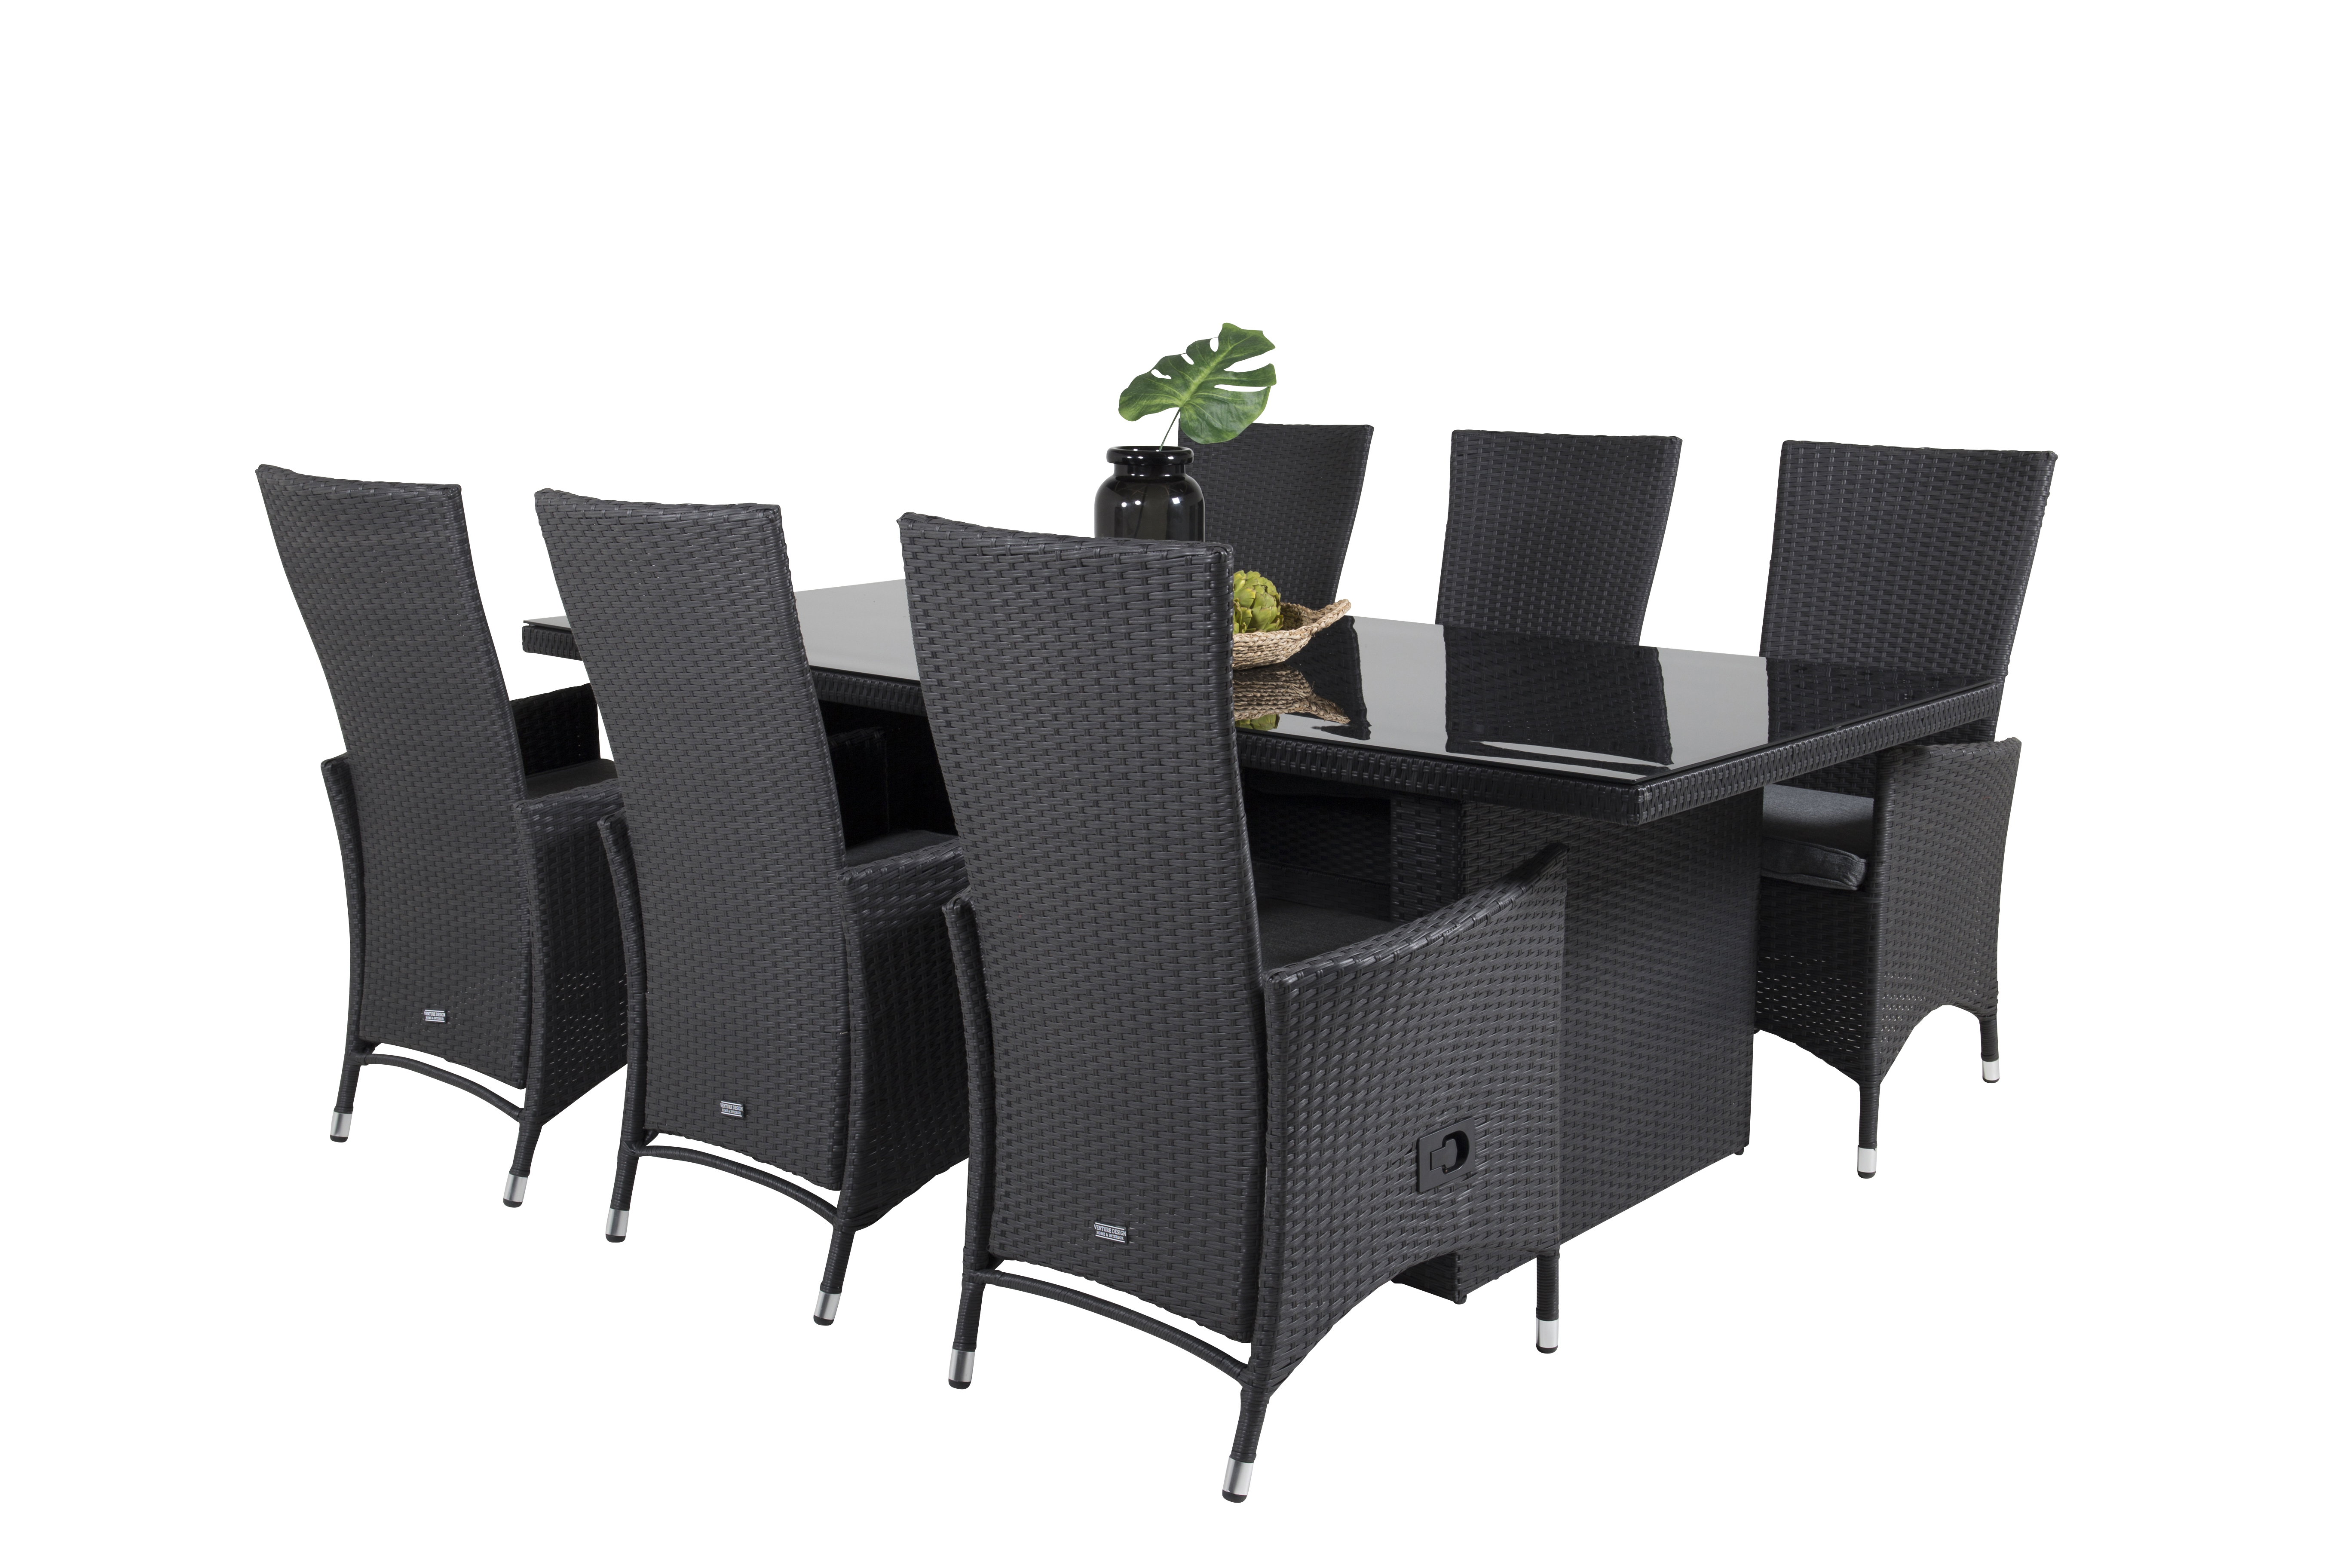 Venture Design - Padova Garden Table 200x100 cm - Rattan/Glas with 6 pcs. Padova Garden Recliner Chairs with Cushion - Alu/Rattan